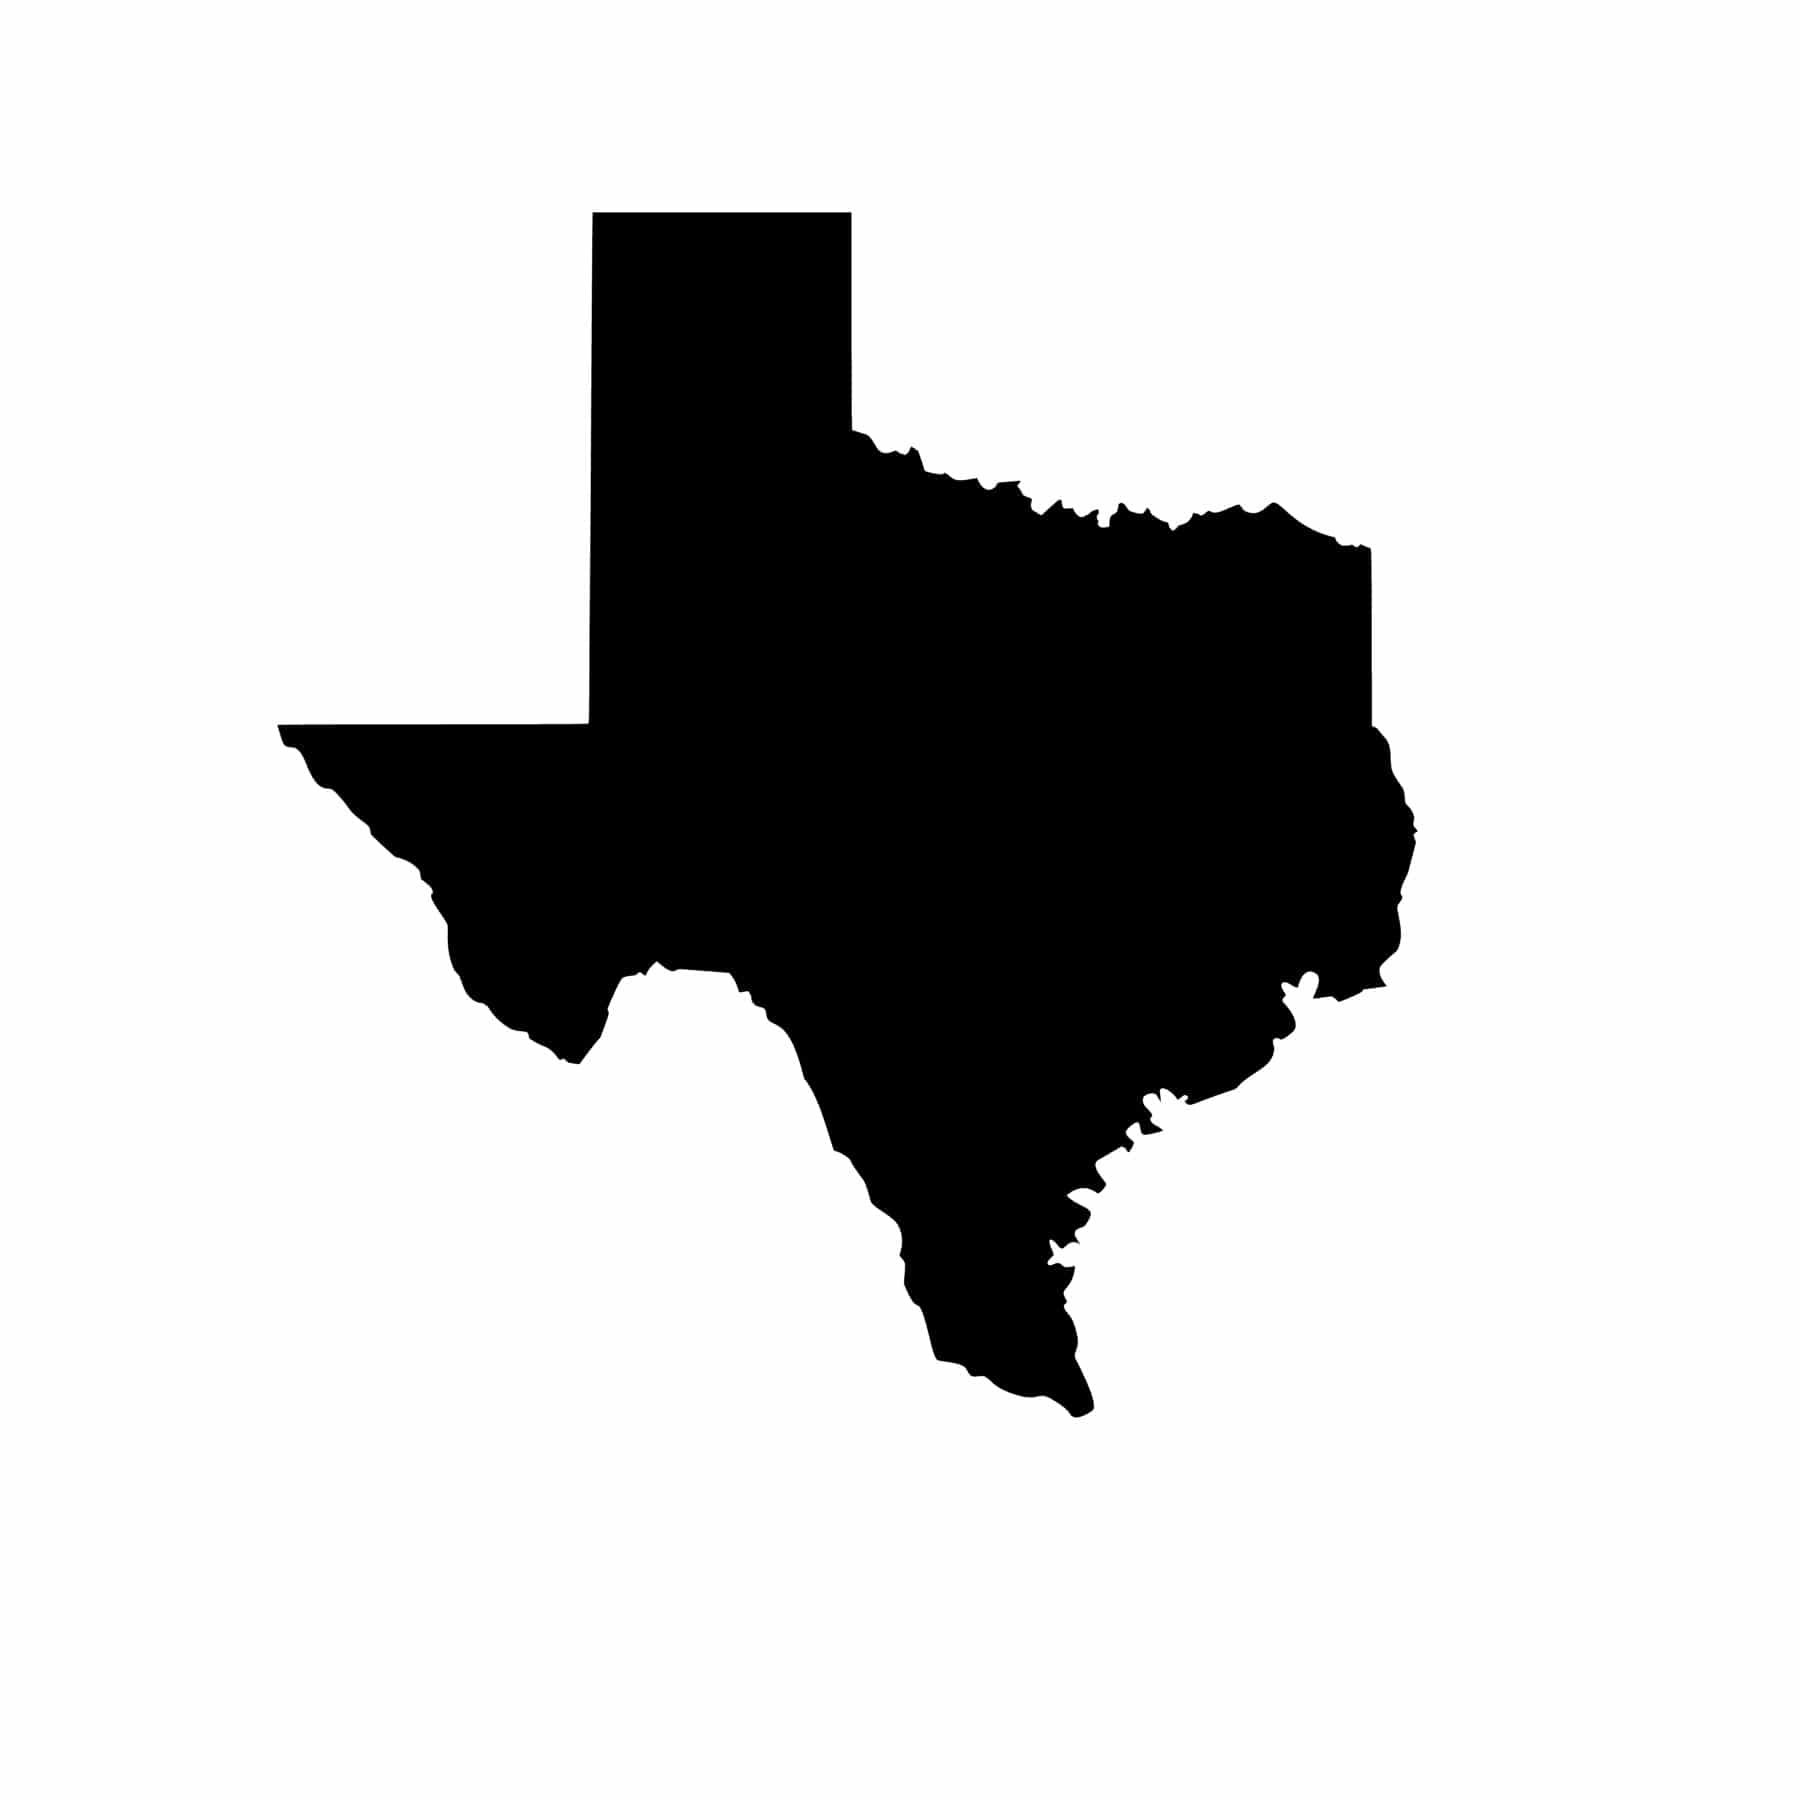 Texas Tax Back Program in San Antonio